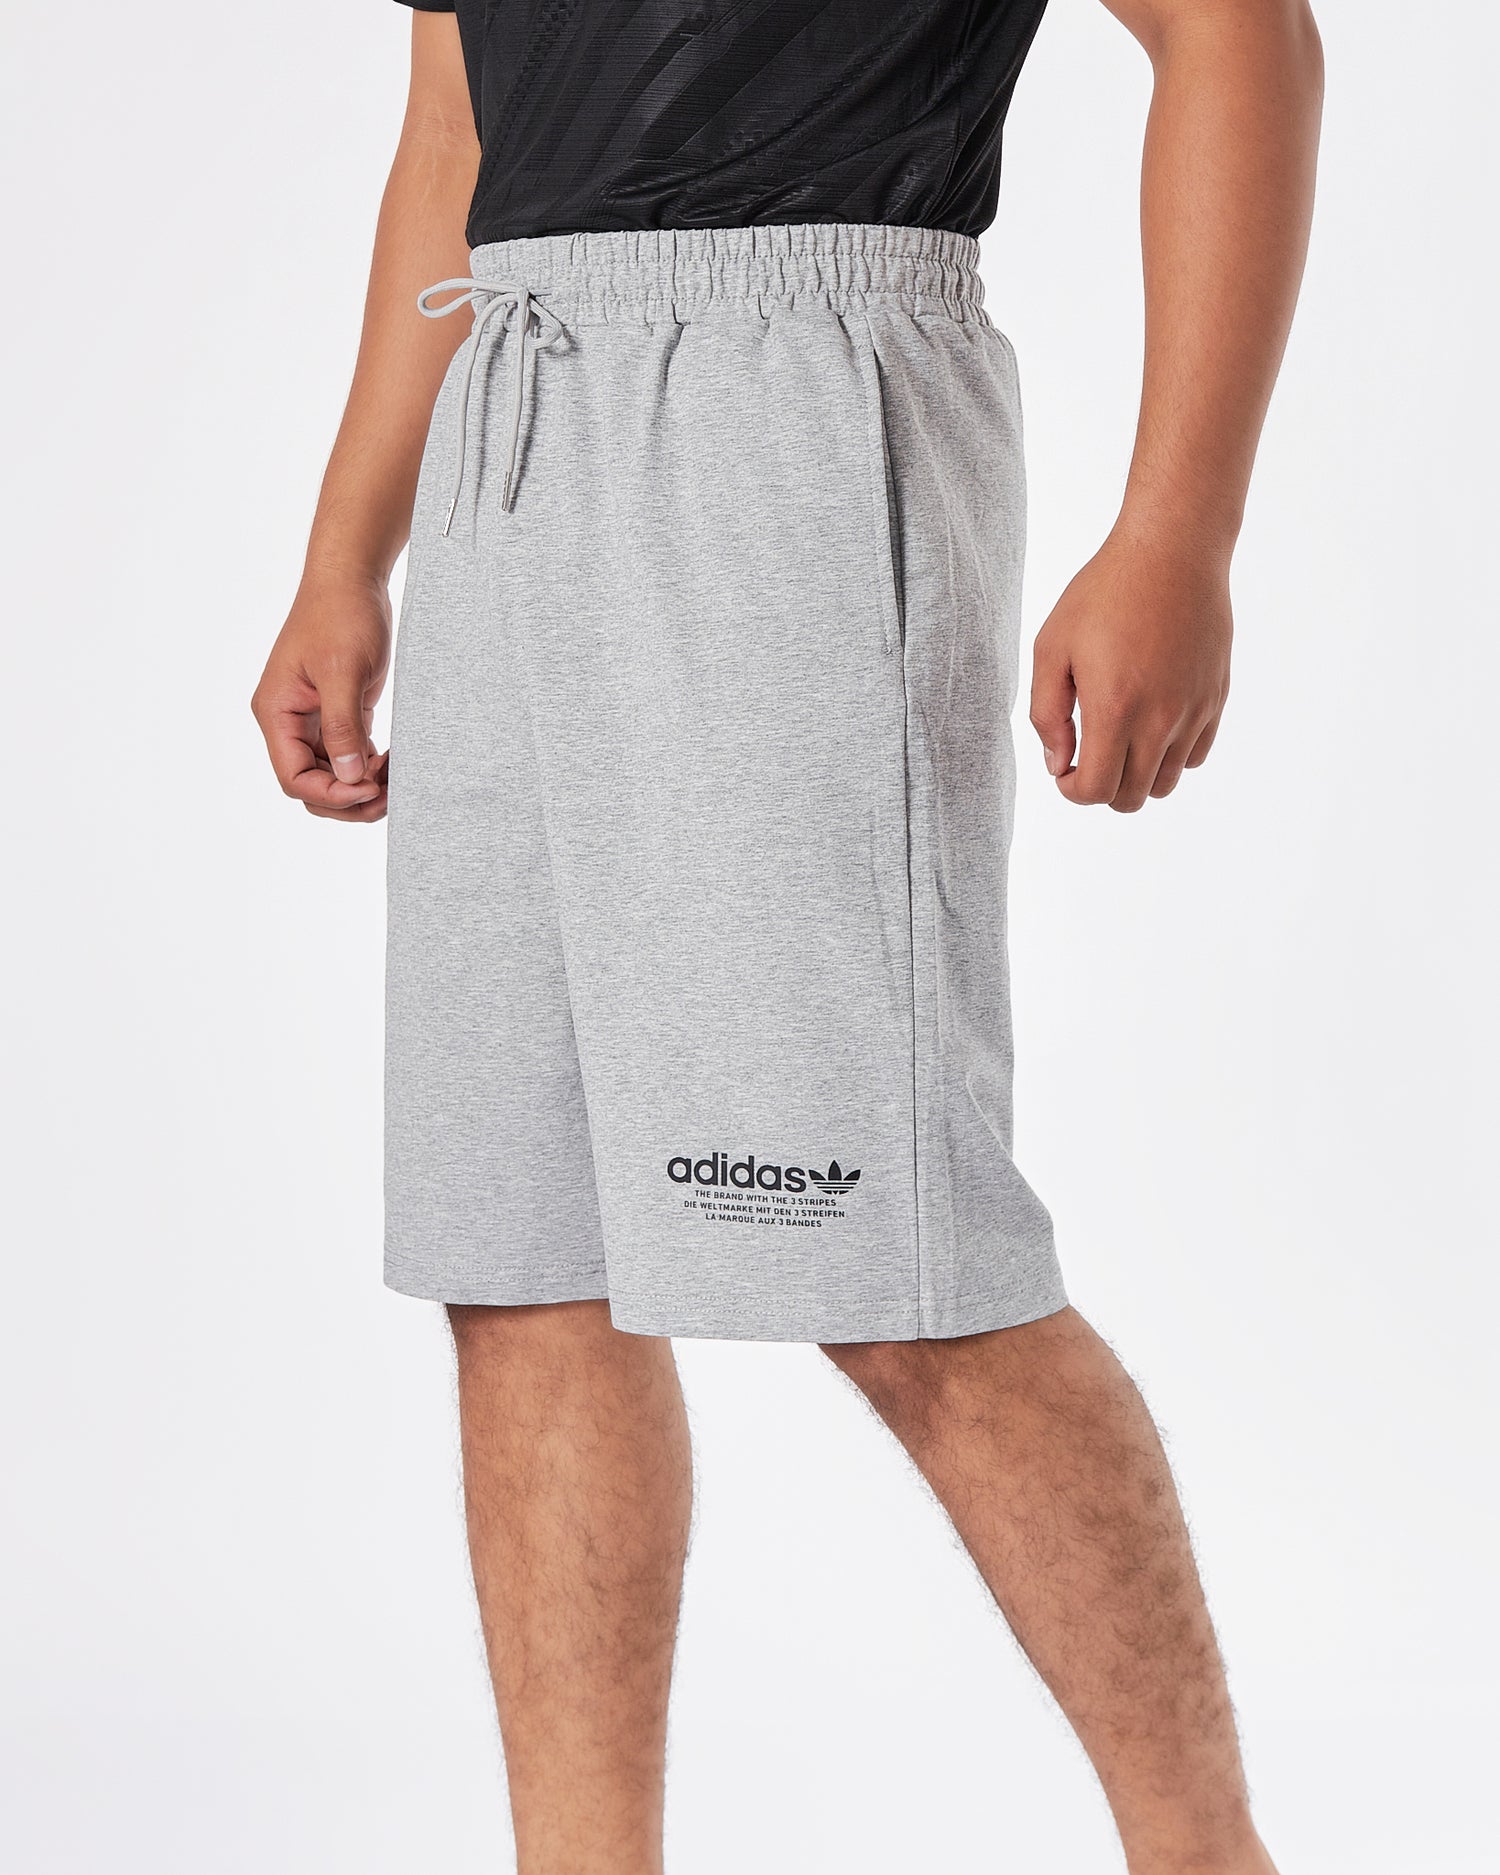 ADI Logo Printed Men Grey Shorts 16.90